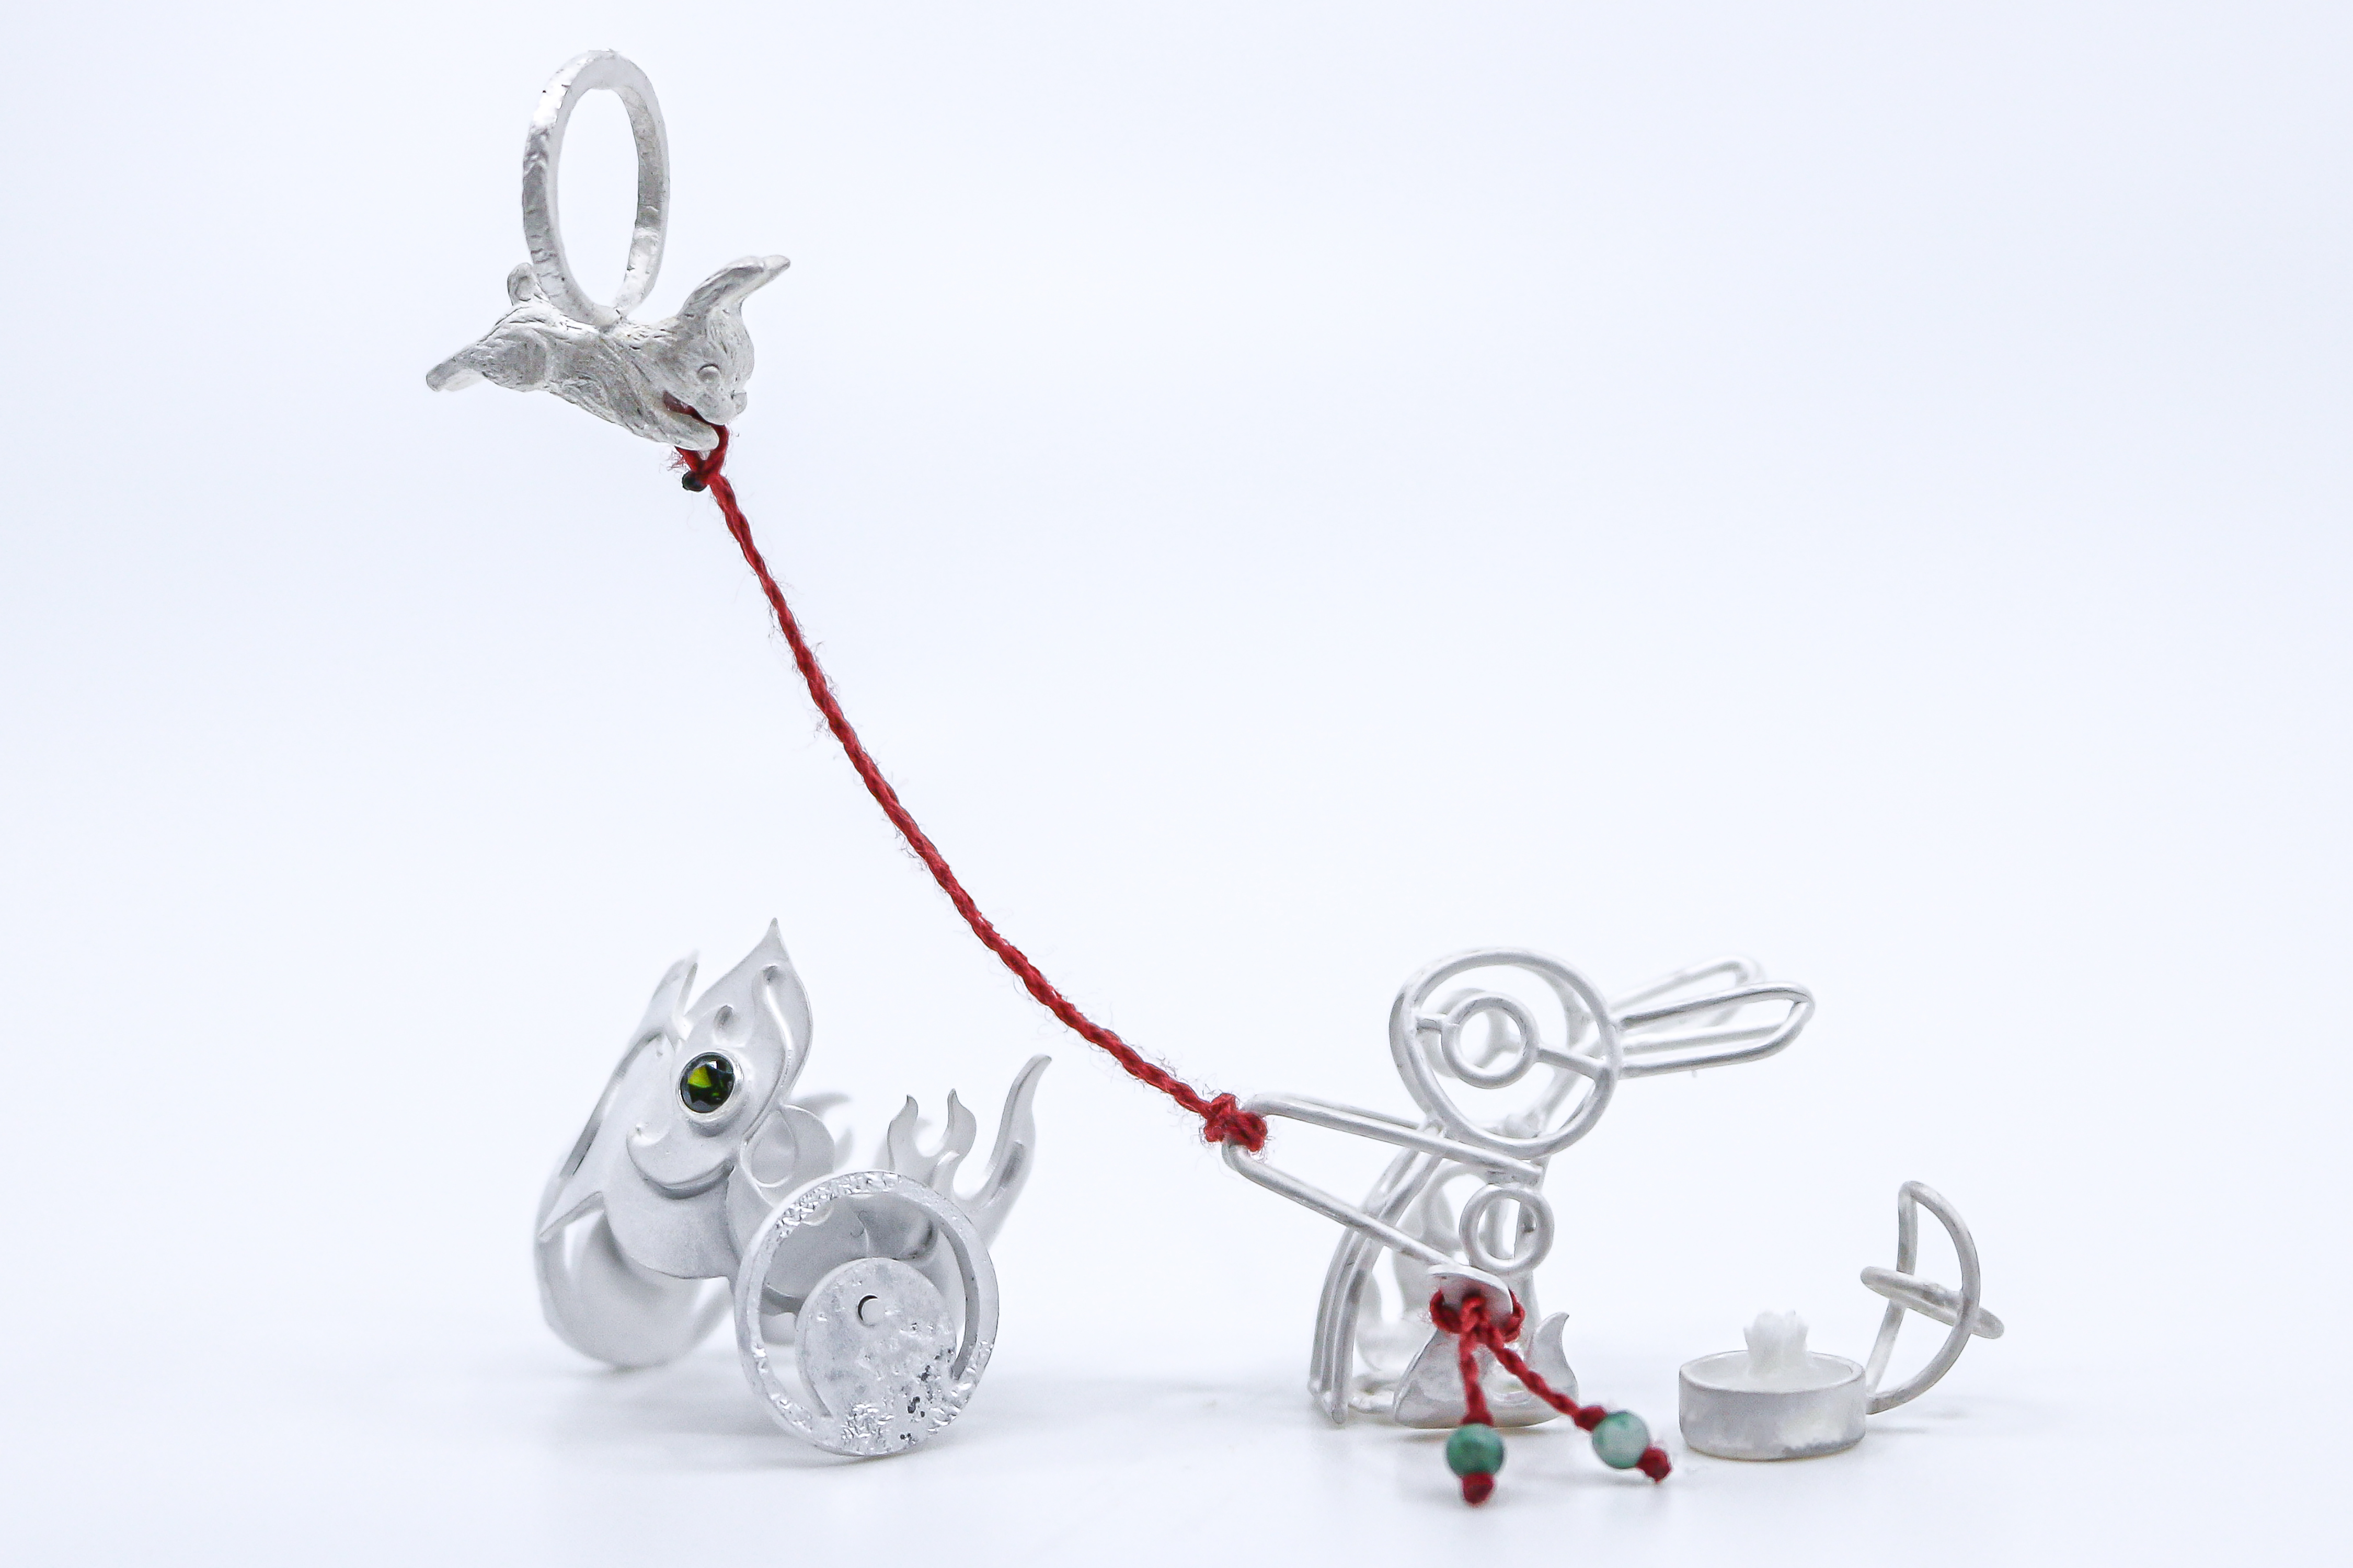 The Rabbit Lantern - The Jade Rabbit